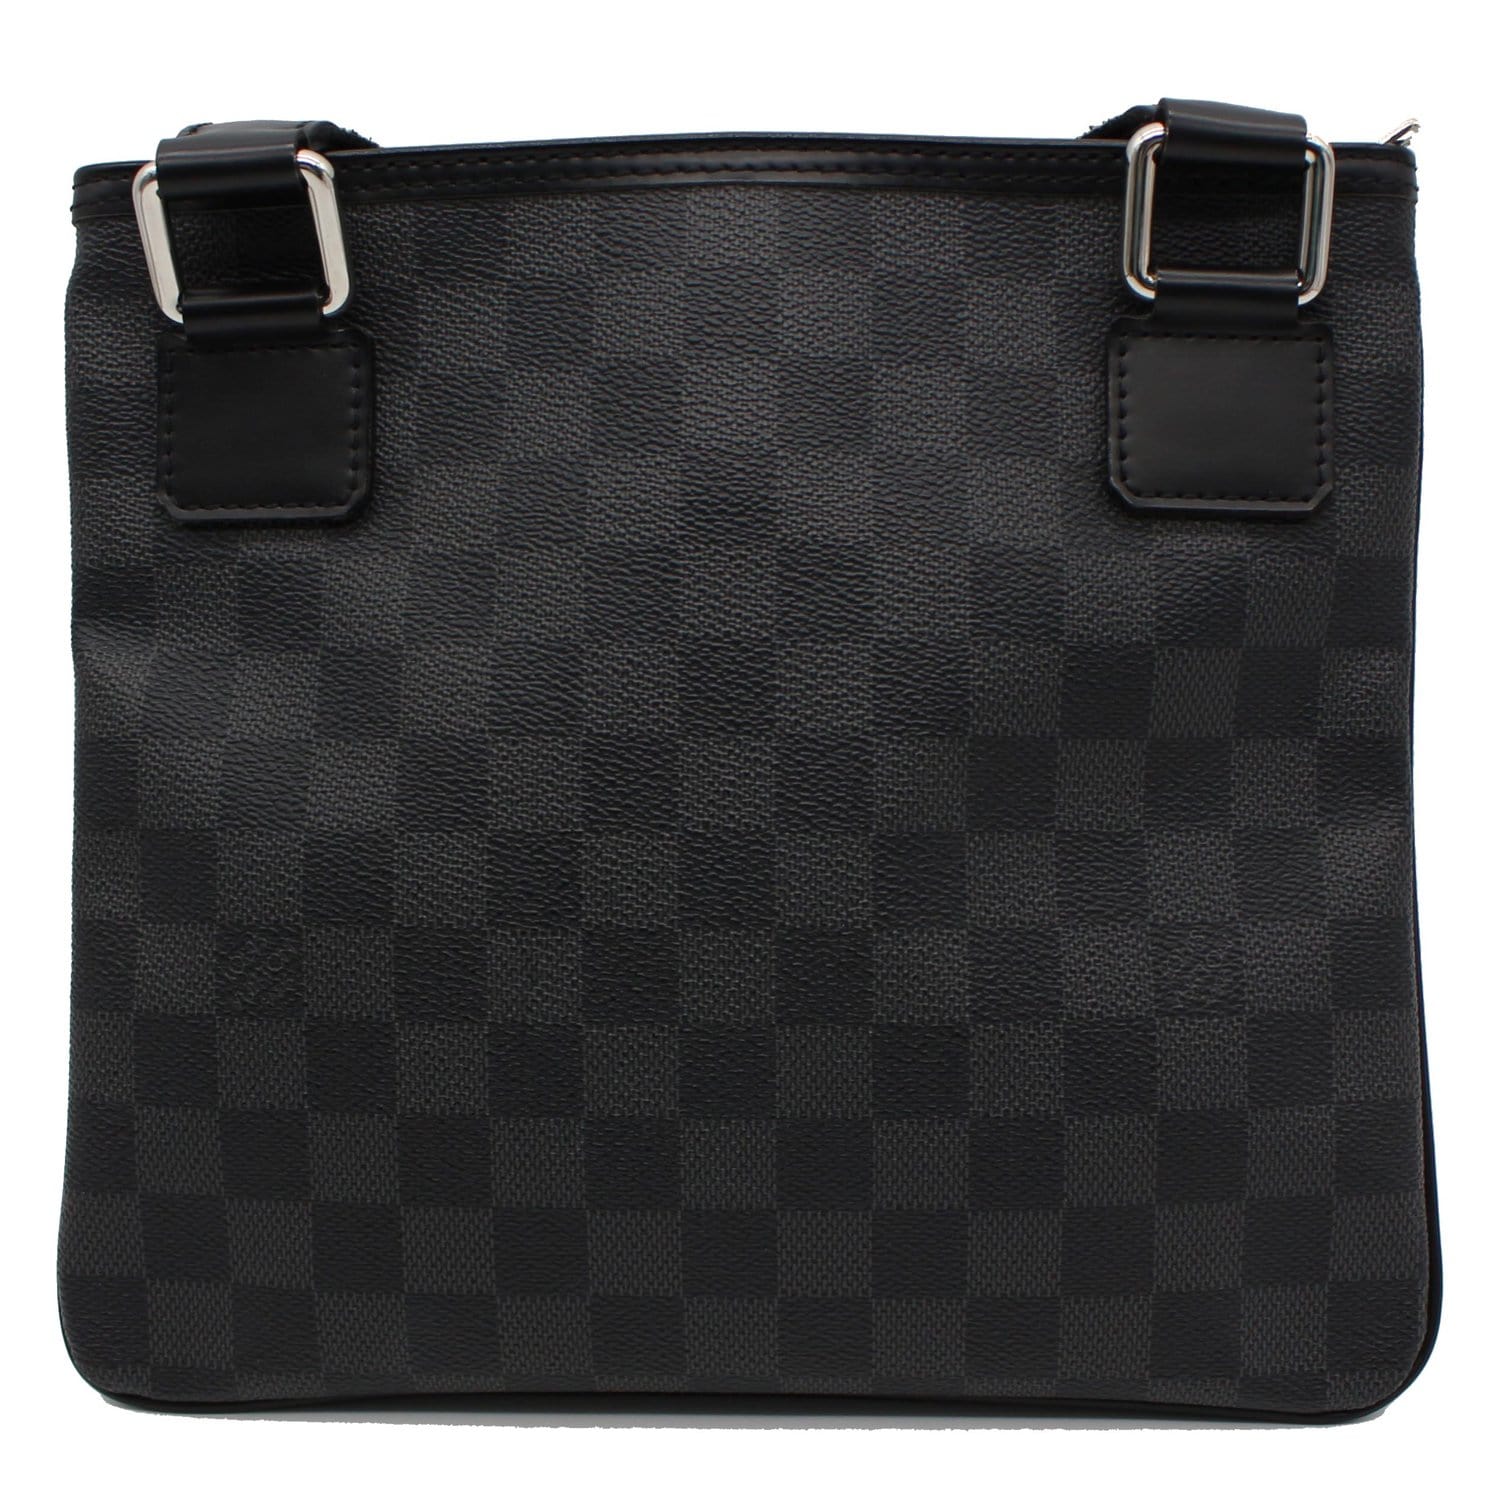 Thomas leather bag Louis Vuitton Black in Leather - 30951960